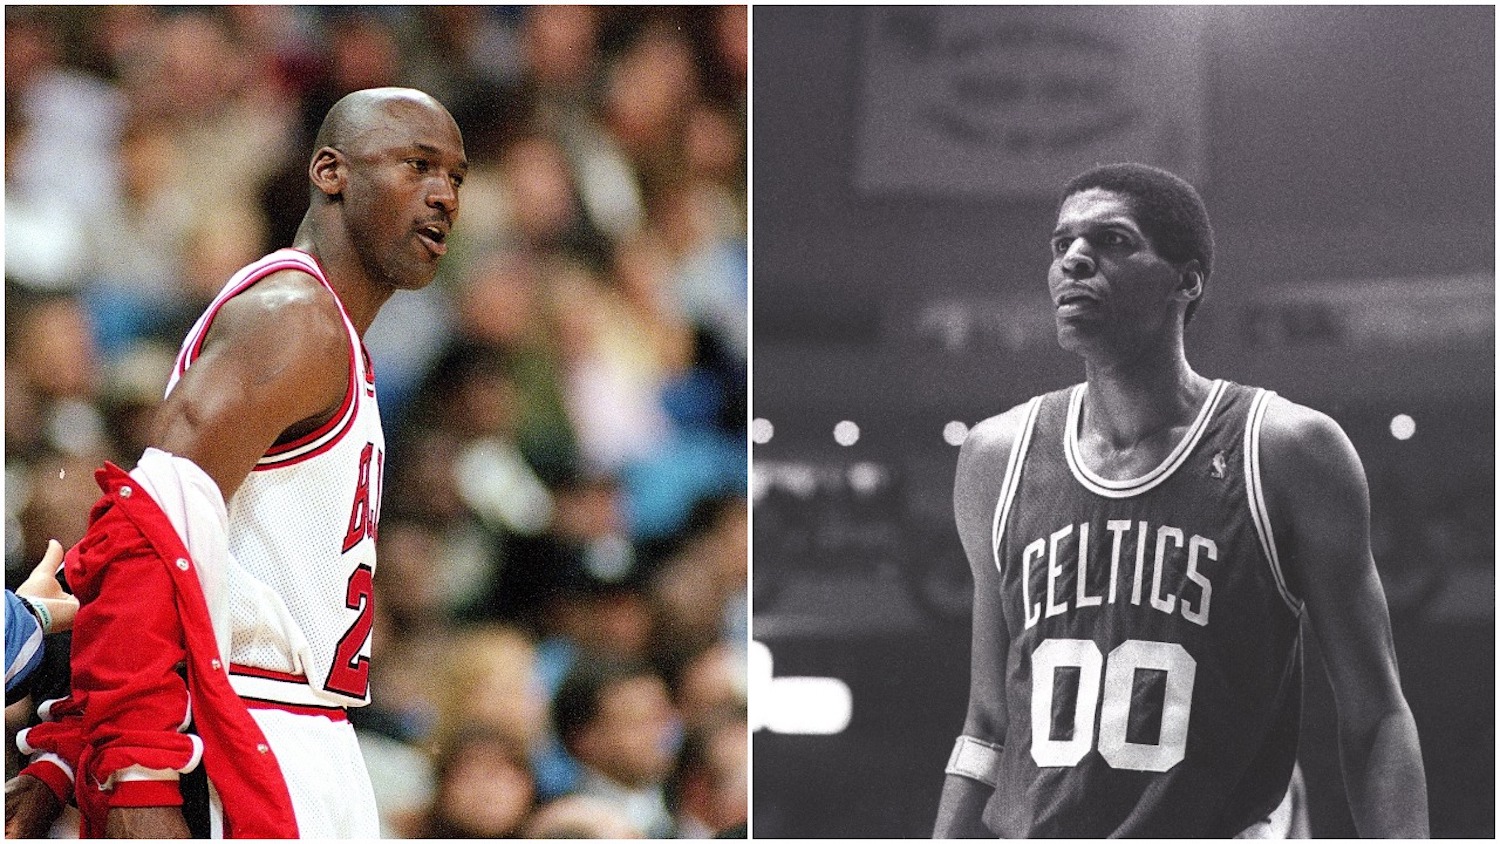 While many consider Michael Jordan to be basketball's GOAT, Robert Parish disagrees.